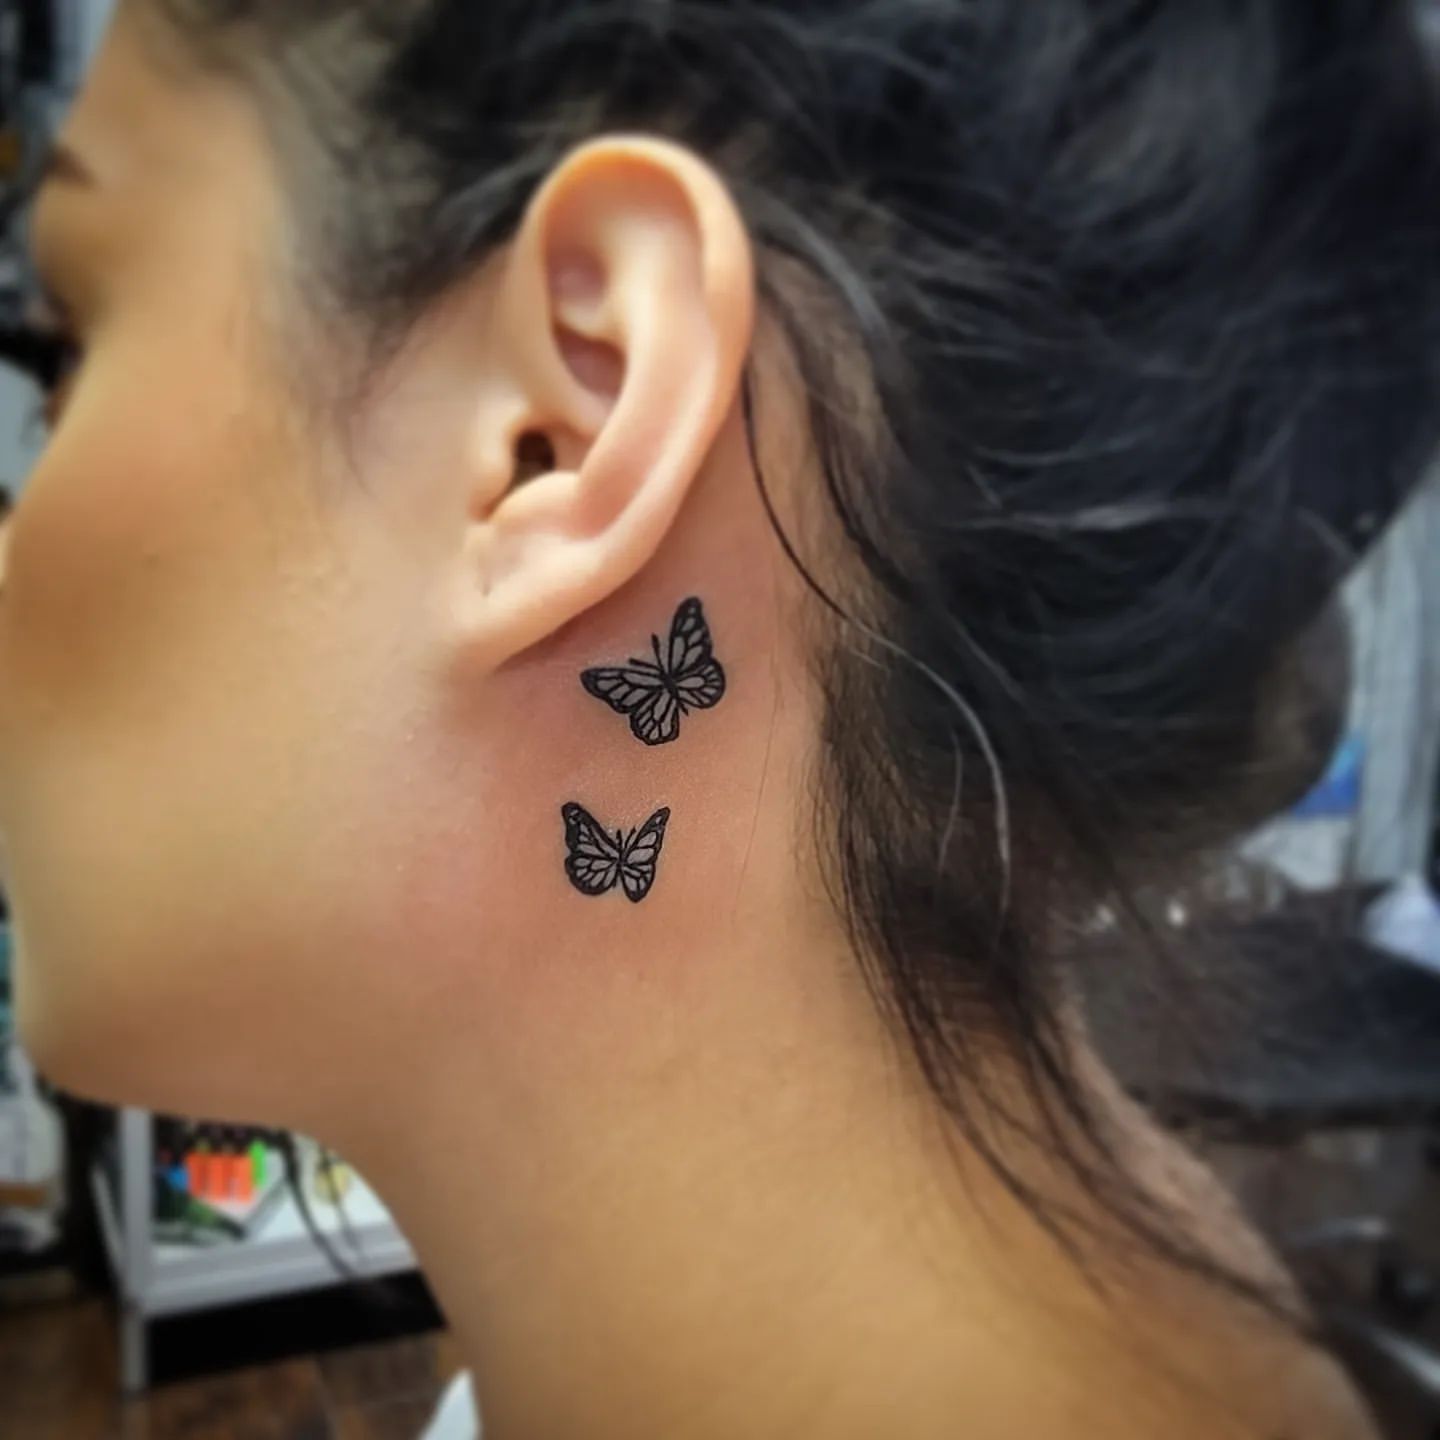 Butterfly tattoo designs behind ear